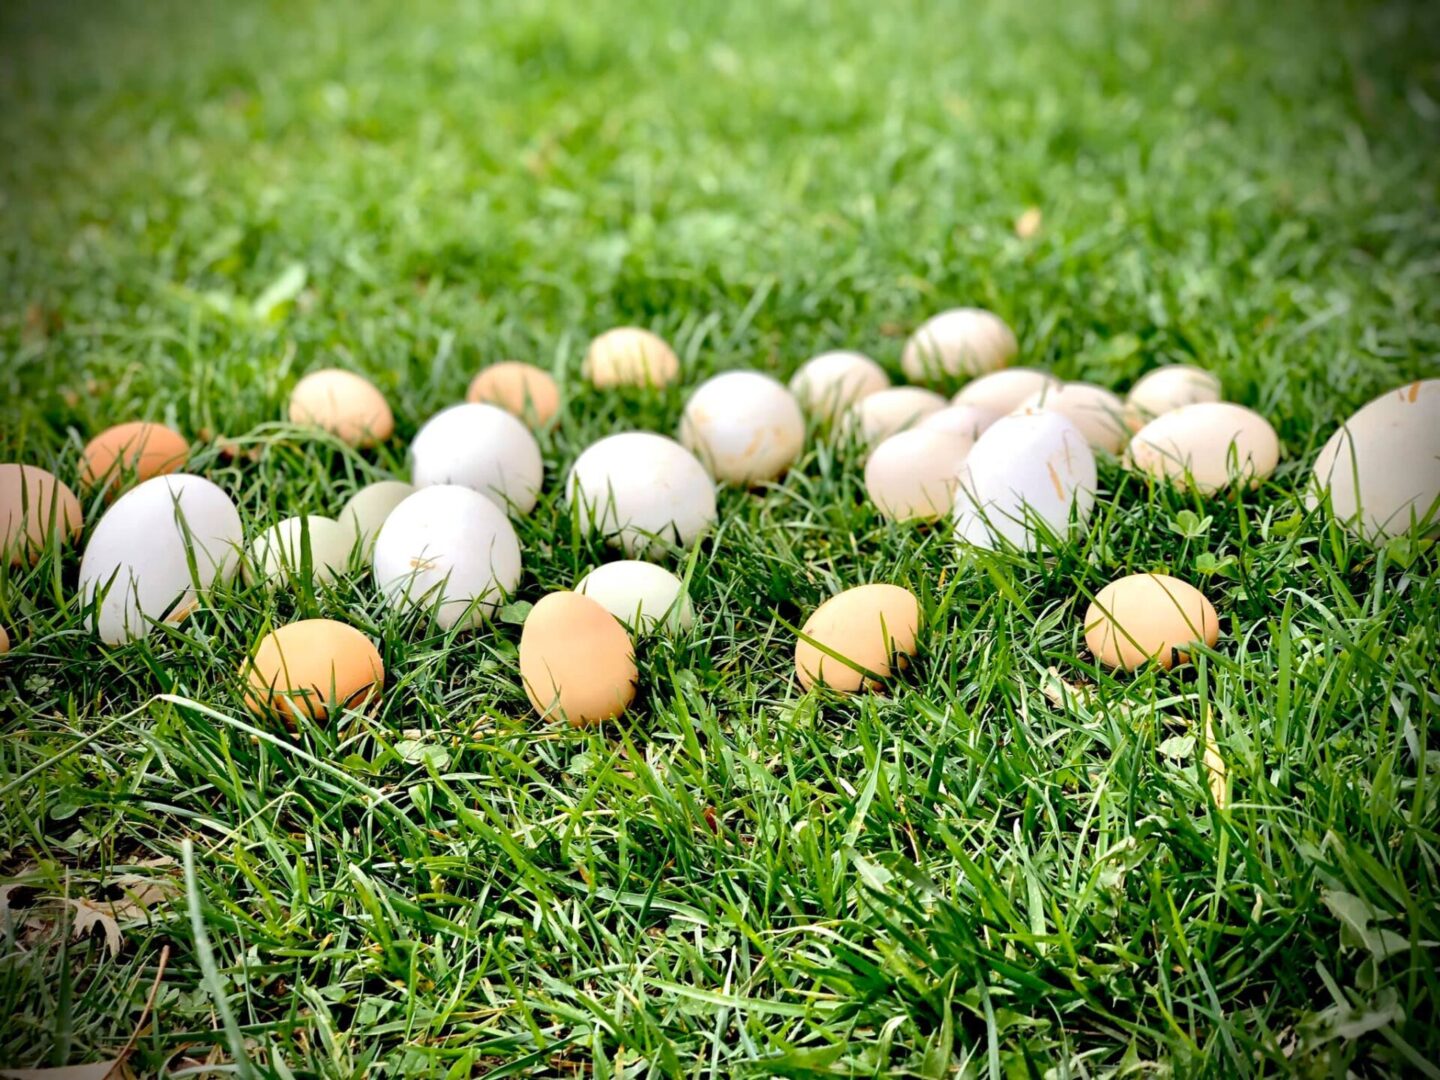 scattered eggs